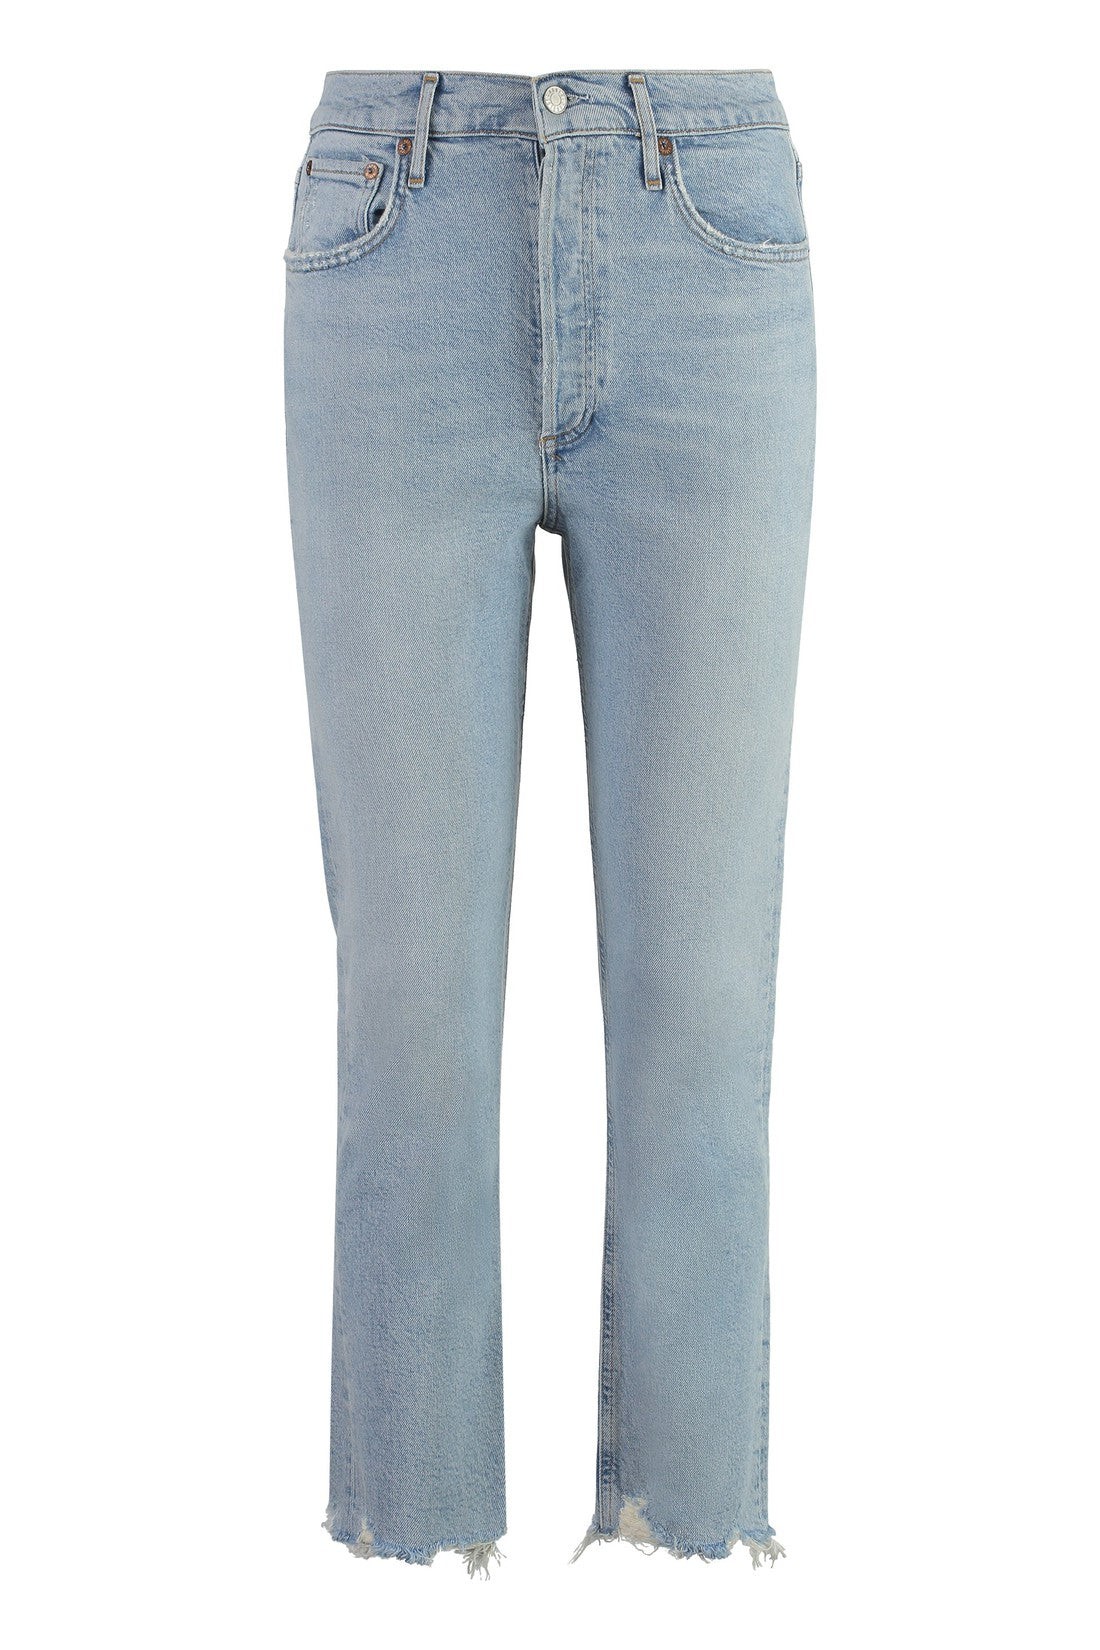 AGOLDE-OUTLET-SALE-Riley Straight leg jeans-ARCHIVIST